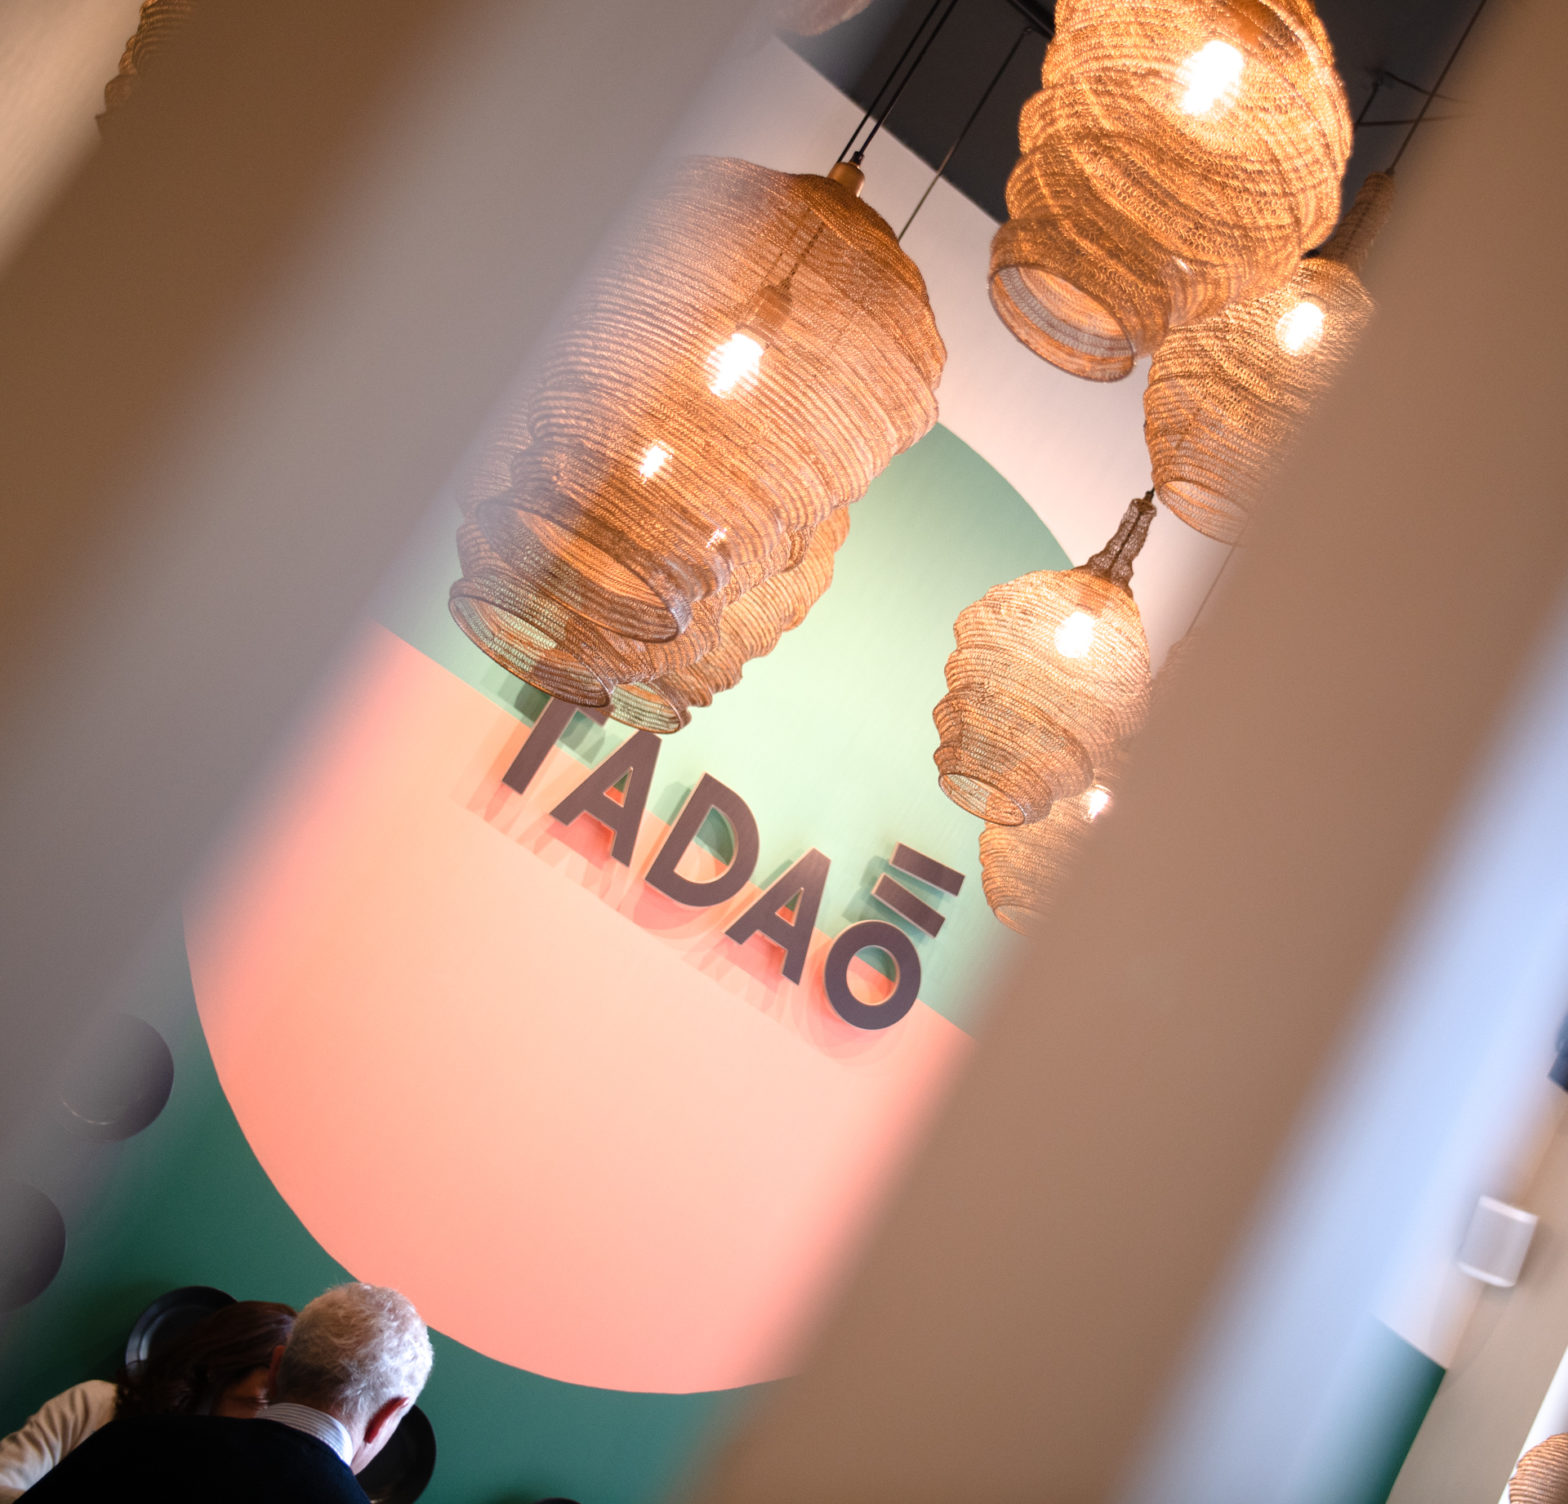 Lampes du restaurant Tadao avec logo